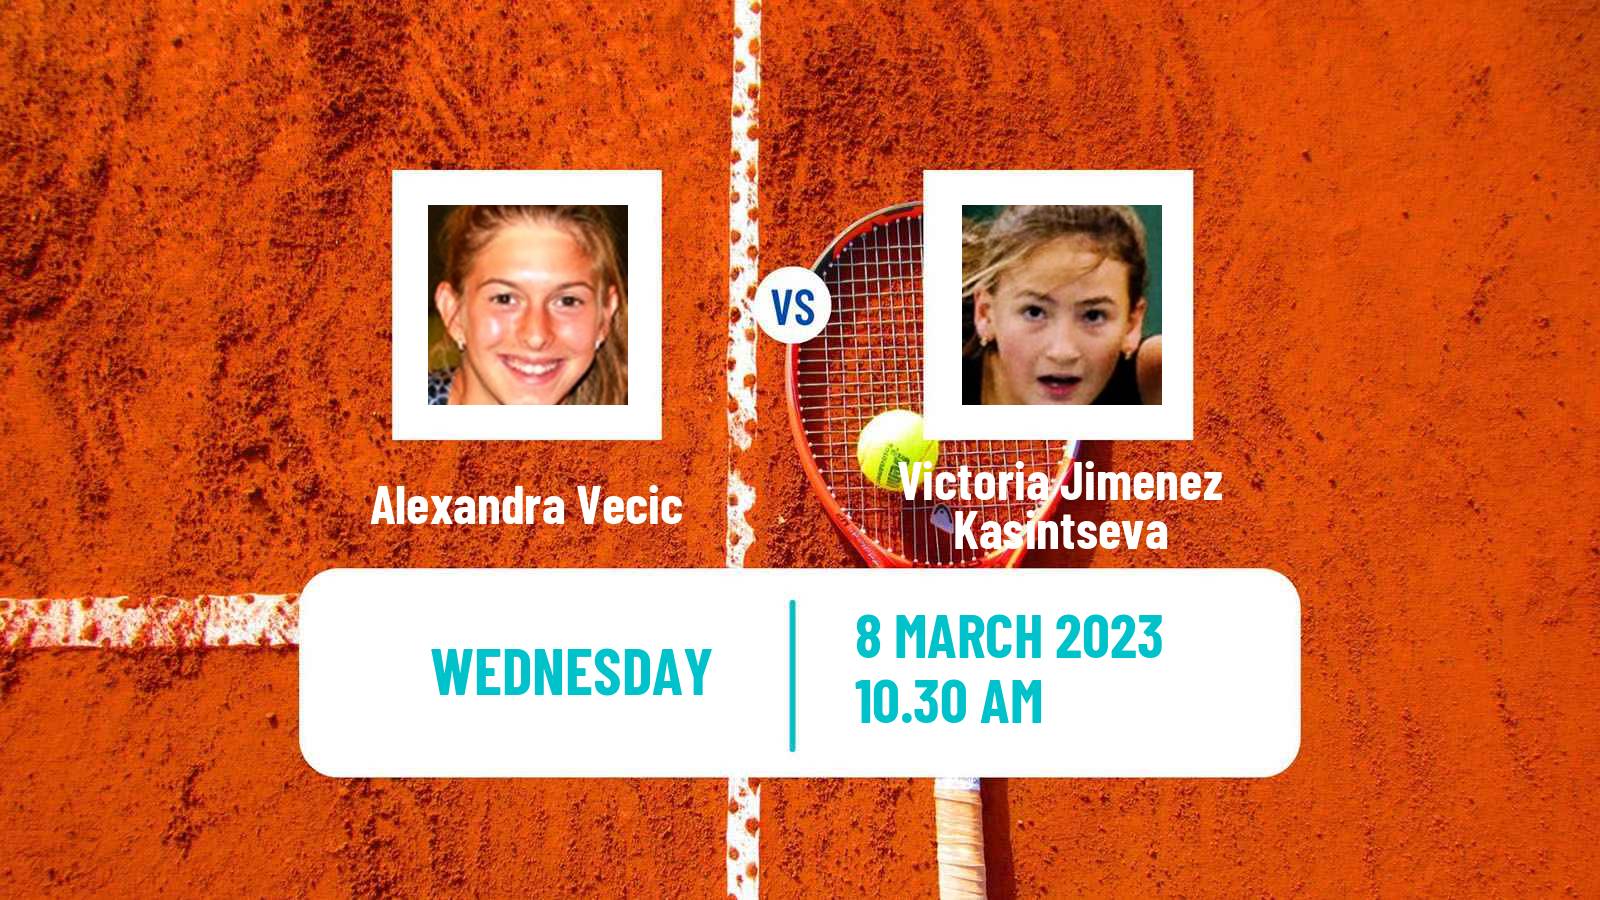 Tennis ITF Tournaments Alexandra Vecic - Victoria Jimenez Kasintseva